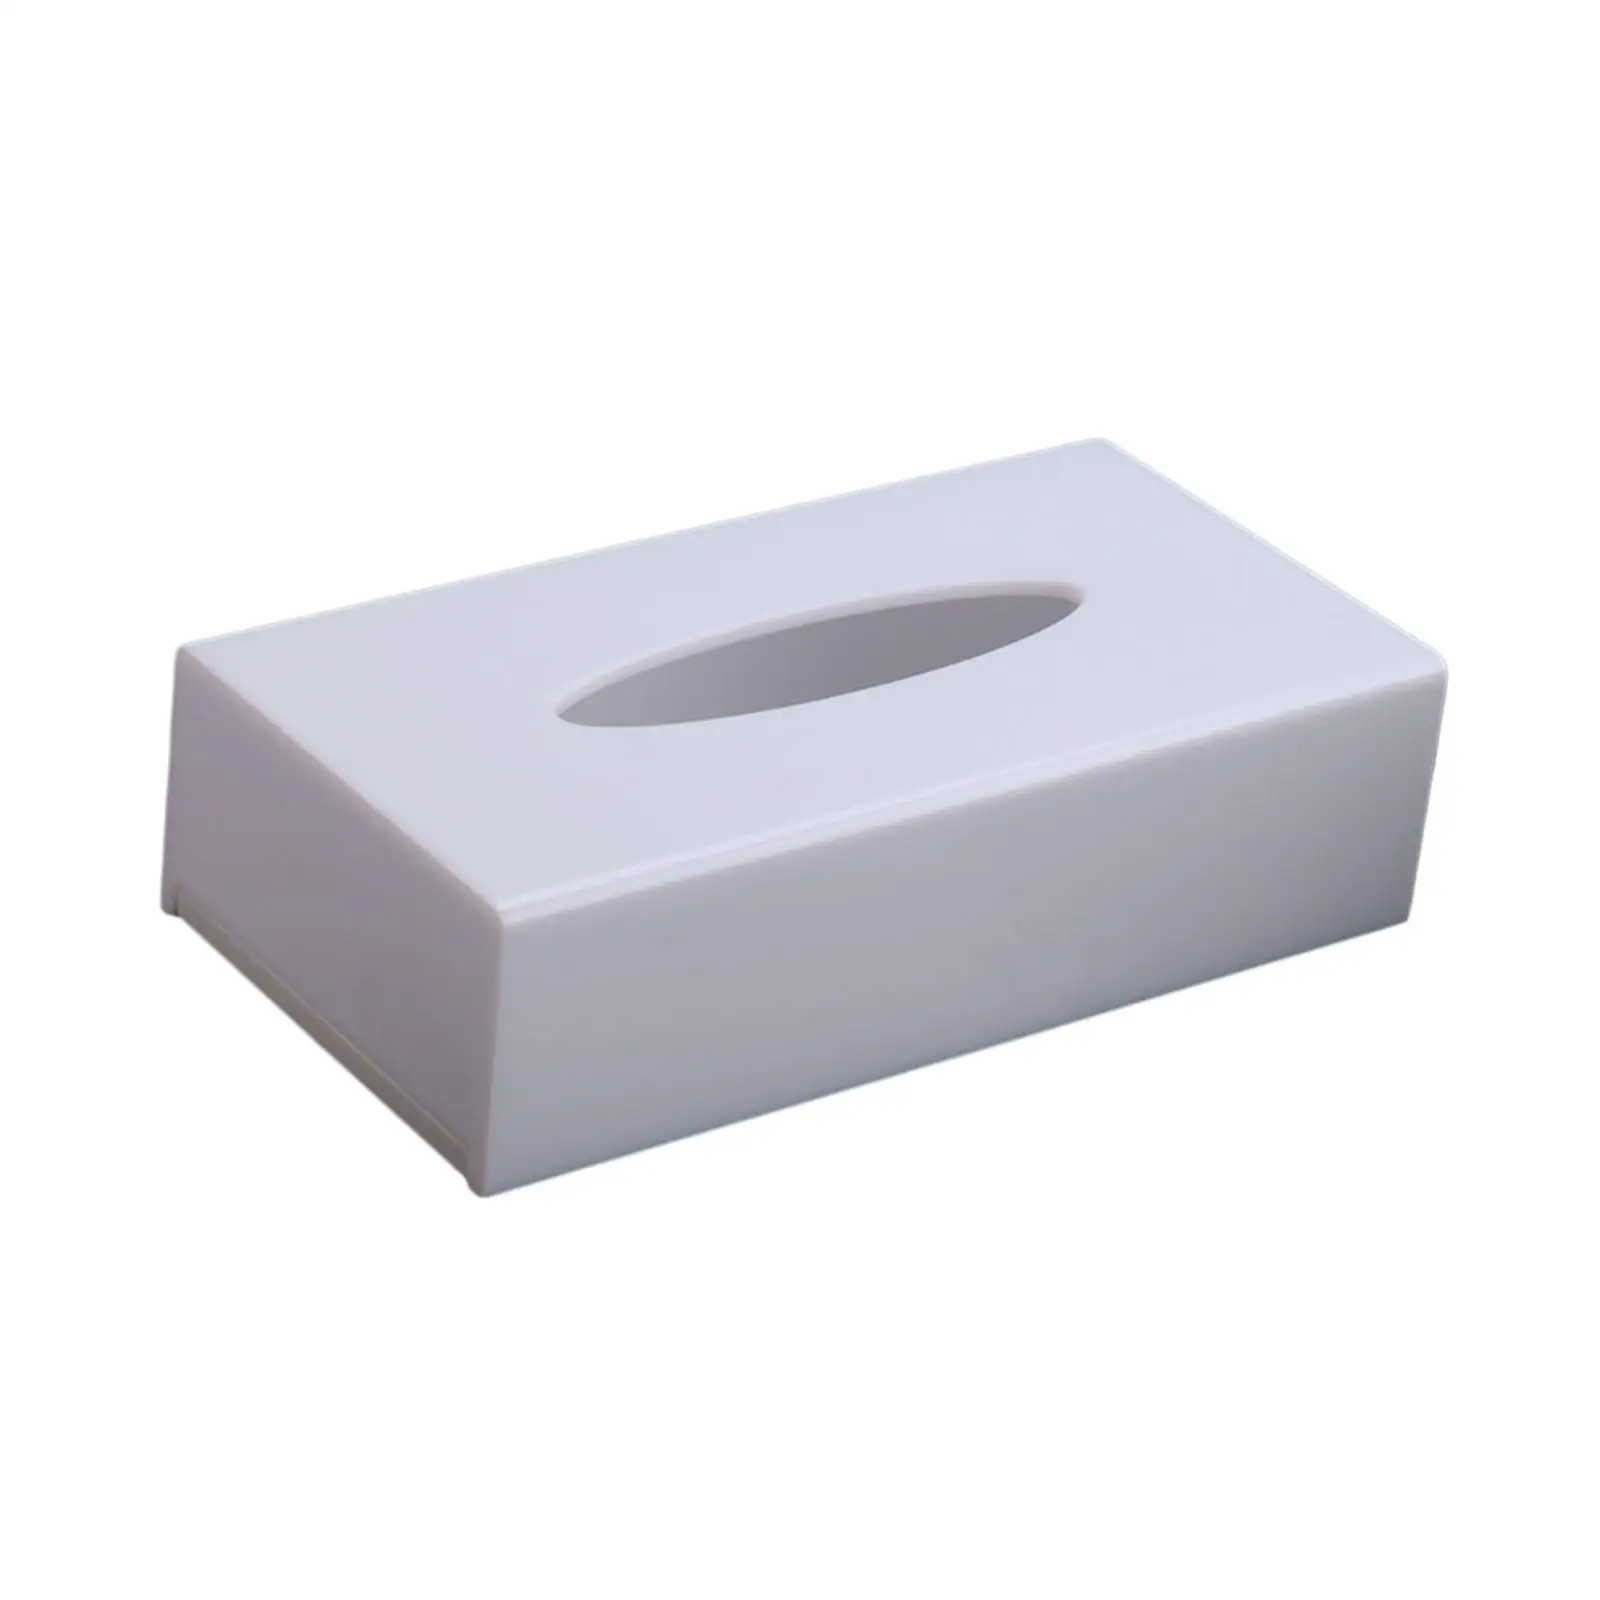 Facial Tissue Case Acrylic Facial Tissue Paper Storage Holder Napkin Dispenser for Office Bathroom Toilet Household Cars